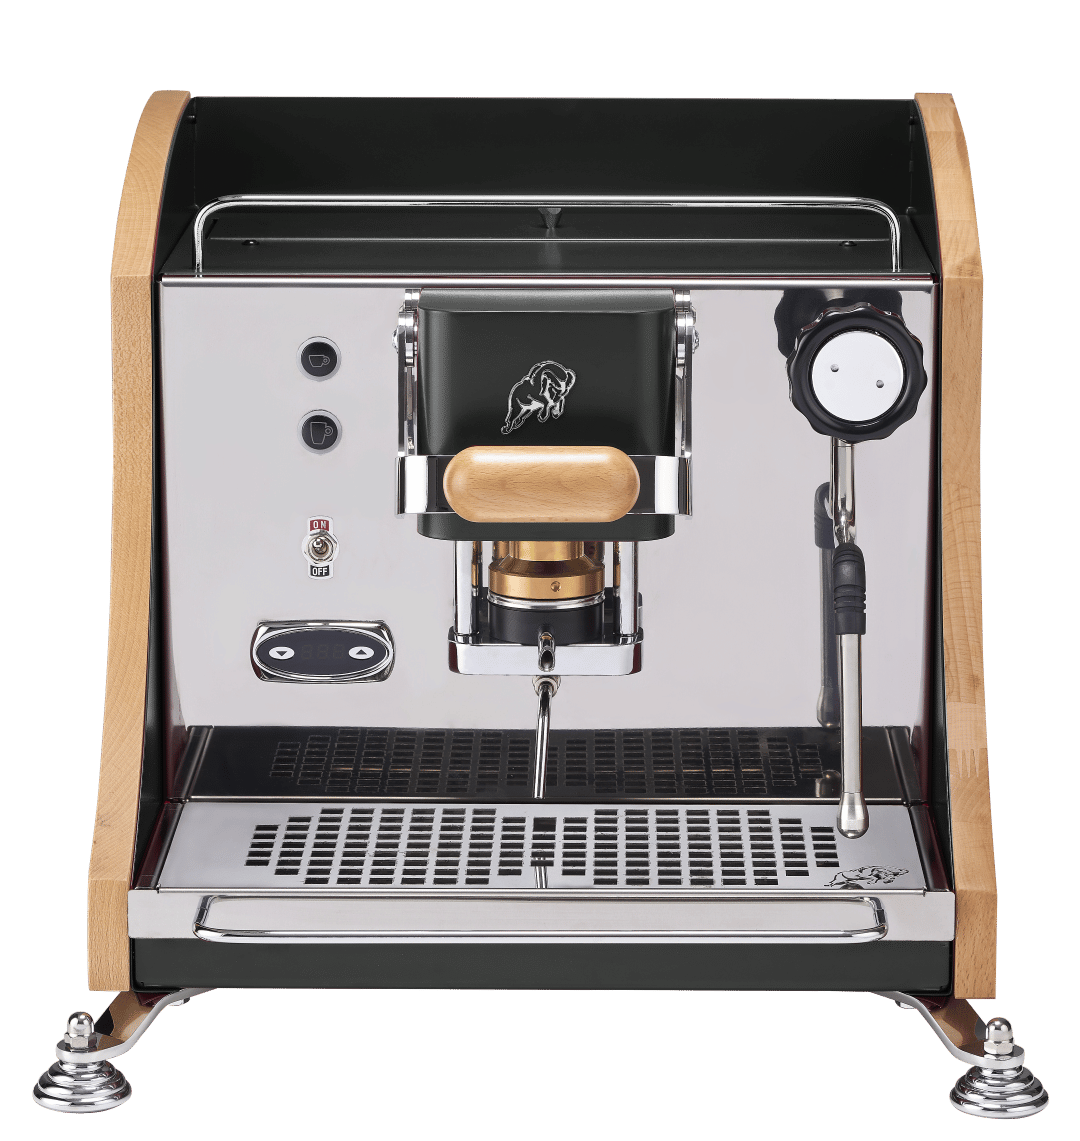 Agenta 1.0 With Vapor (1 Group) Coffee Machine